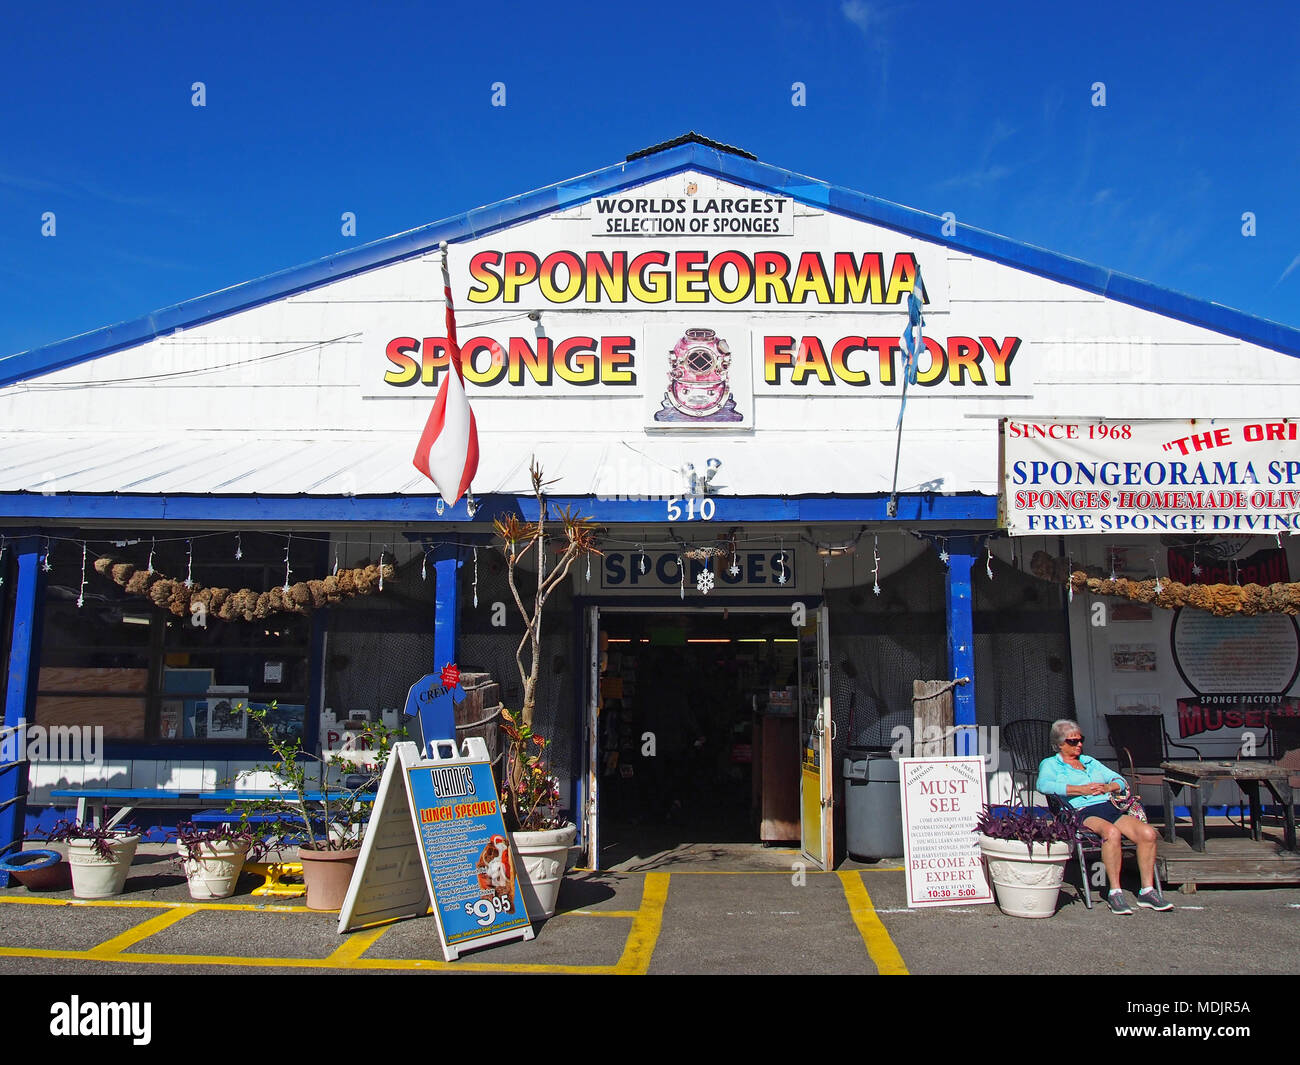 Spongeorama Sponge Factory – Tarpon Springs, FL – The World's